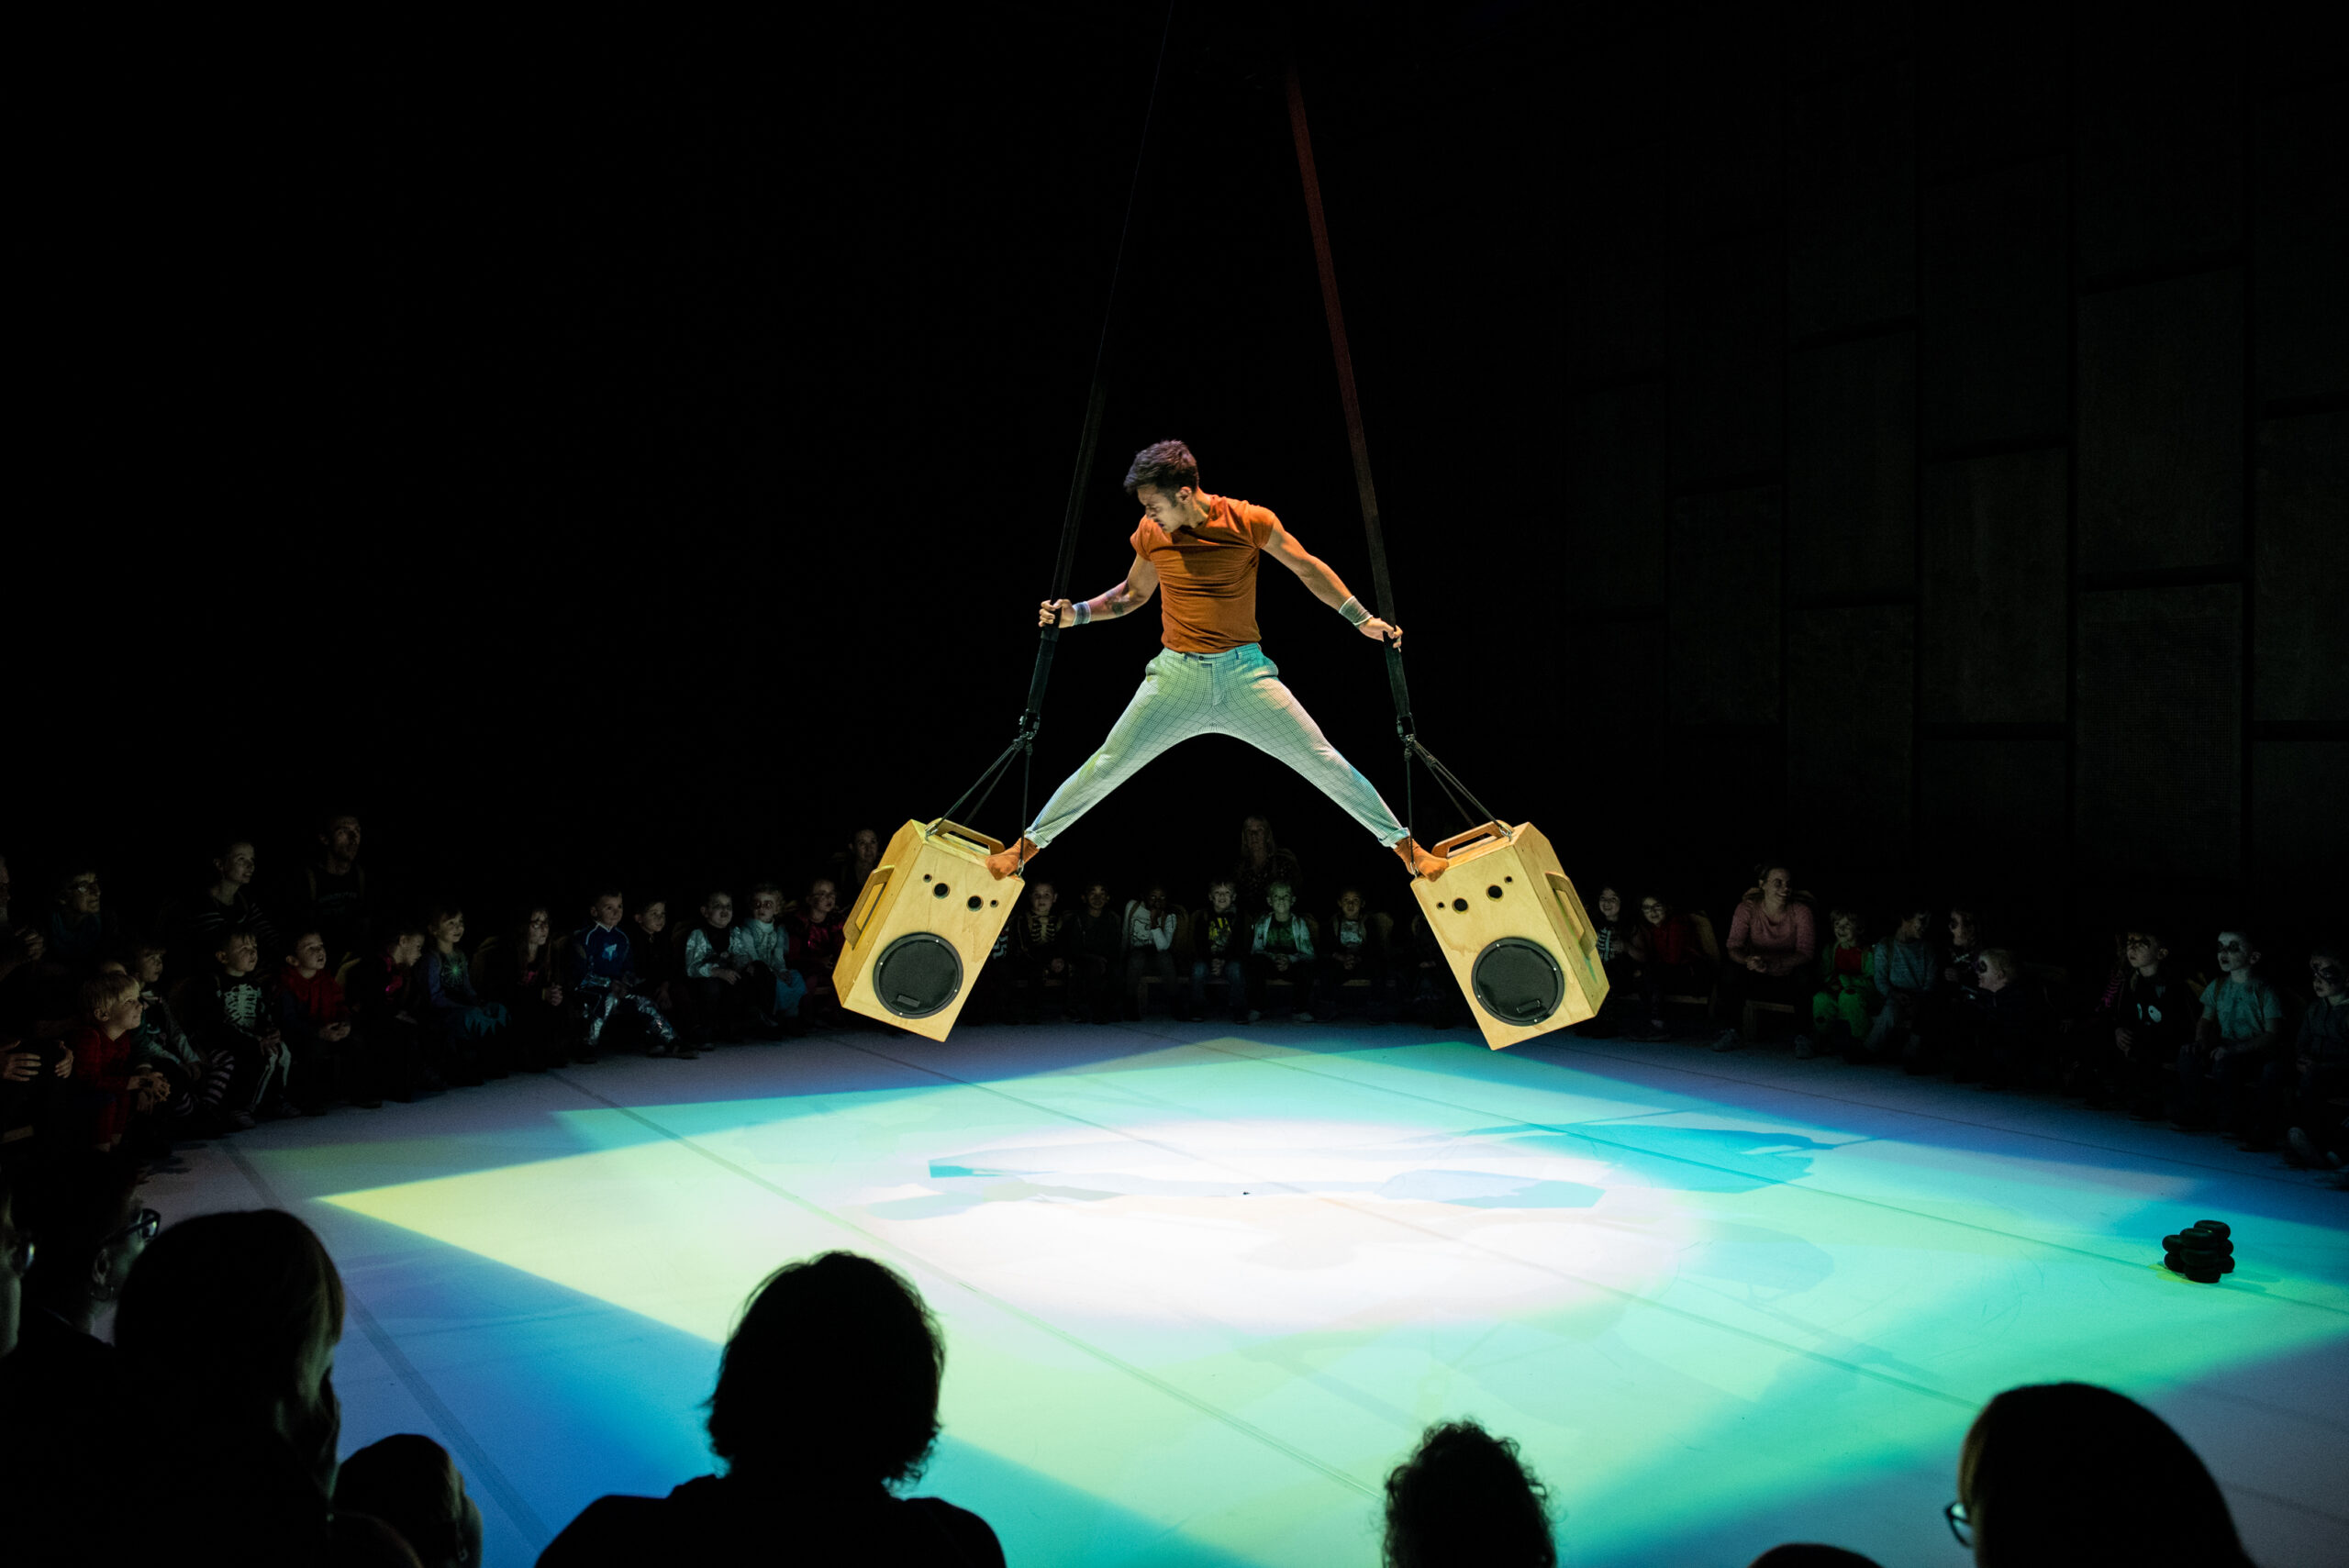  36 ème Festival du Cirque Actuel/aufildeslieux.fr/Murmur - Cie Grensgeval ©Geert Roels 